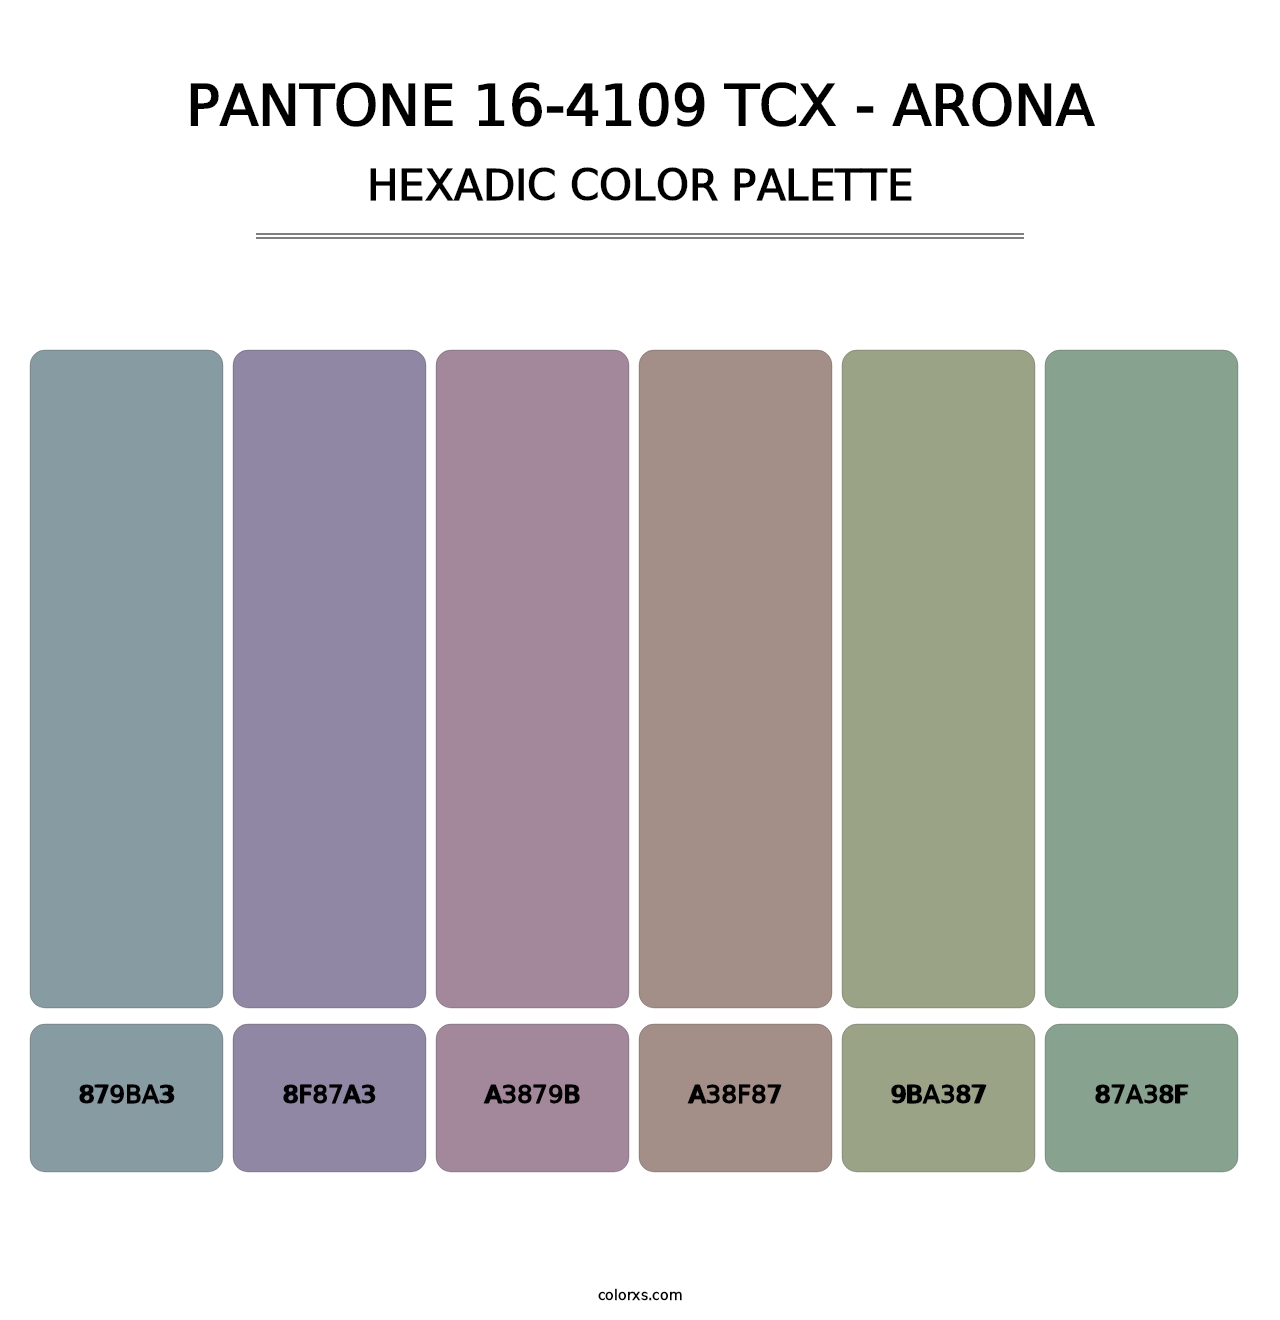 PANTONE 16-4109 TCX - Arona - Hexadic Color Palette